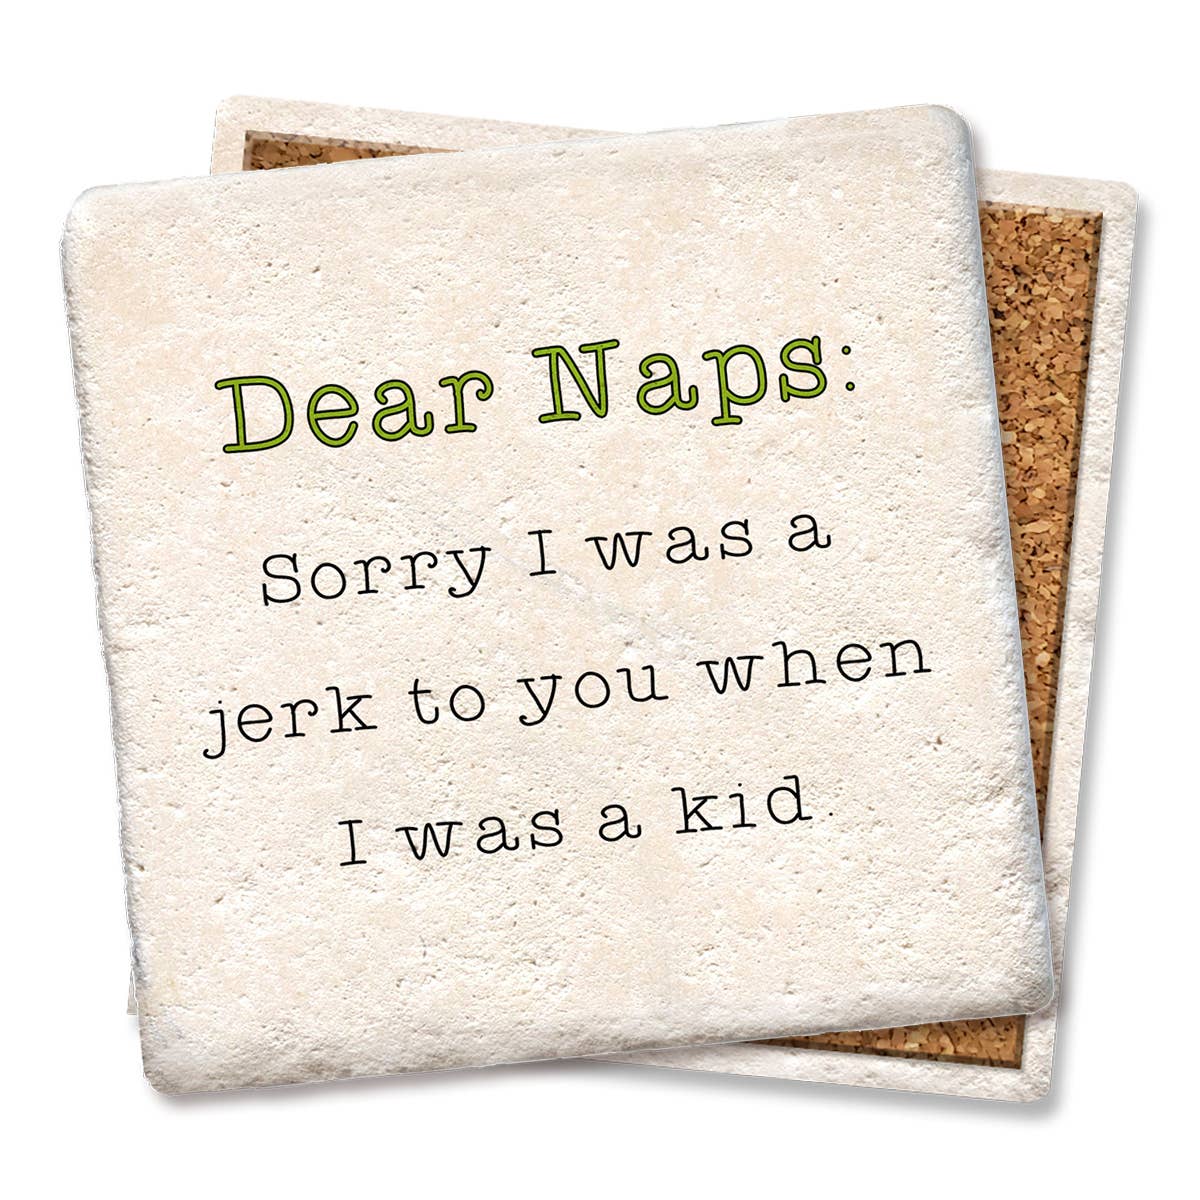 Coaster Dear Naps: Sorry I was a jerk to you